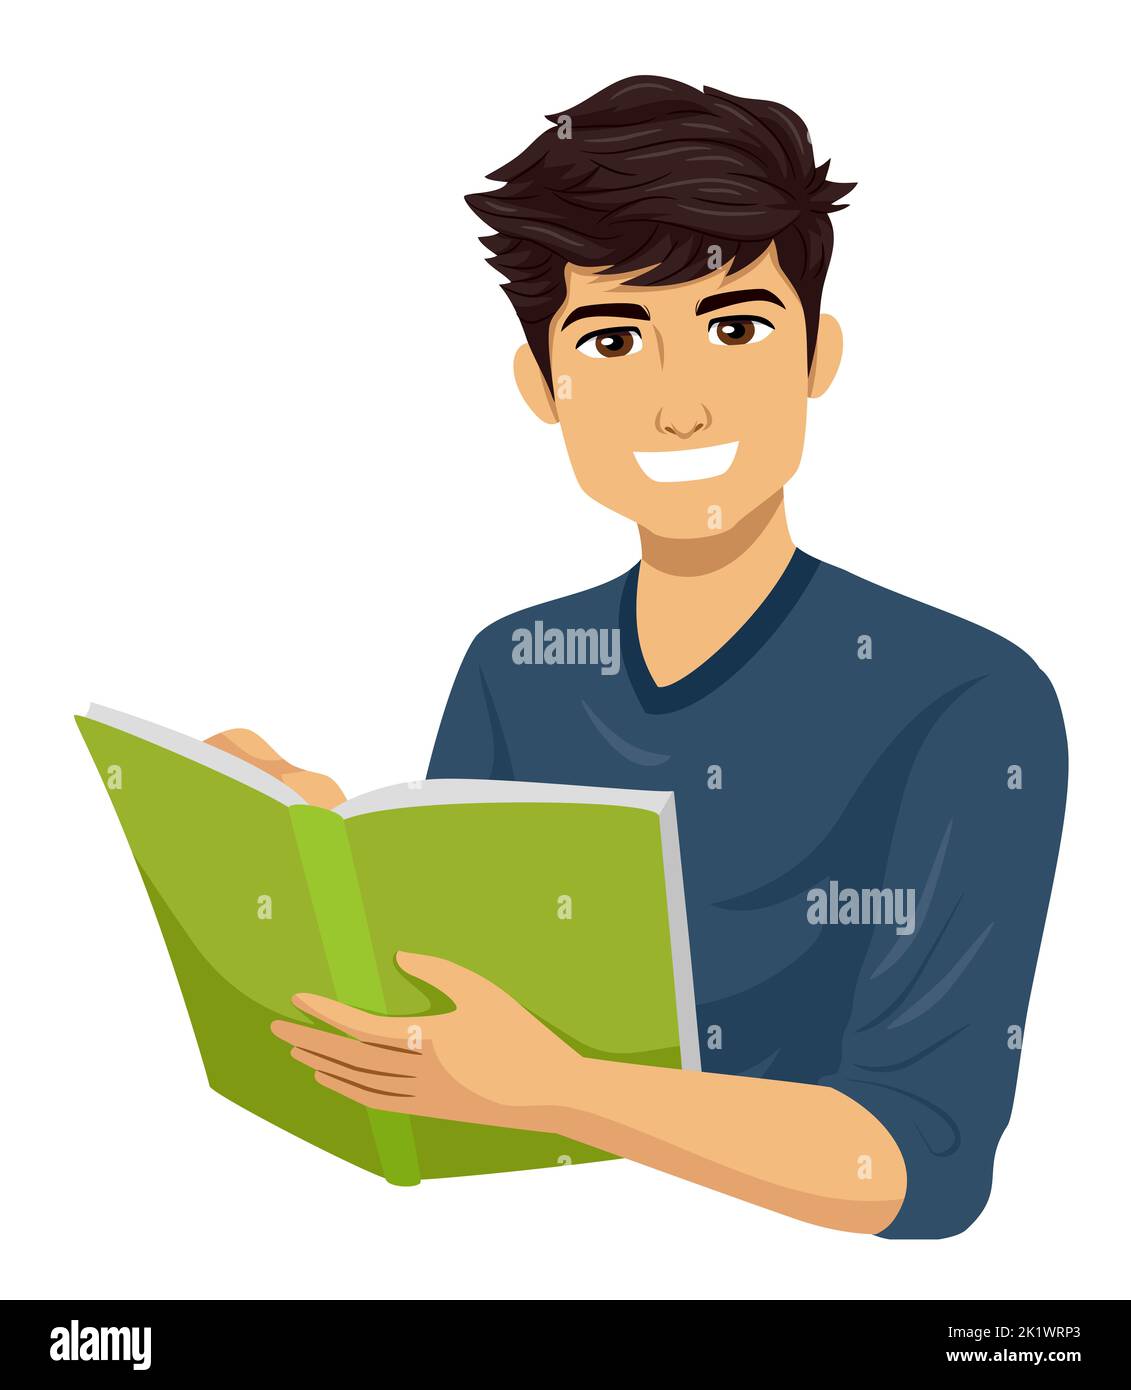 Illustration of Hispanic Teen Guy Student Holding a Book Stock Photo